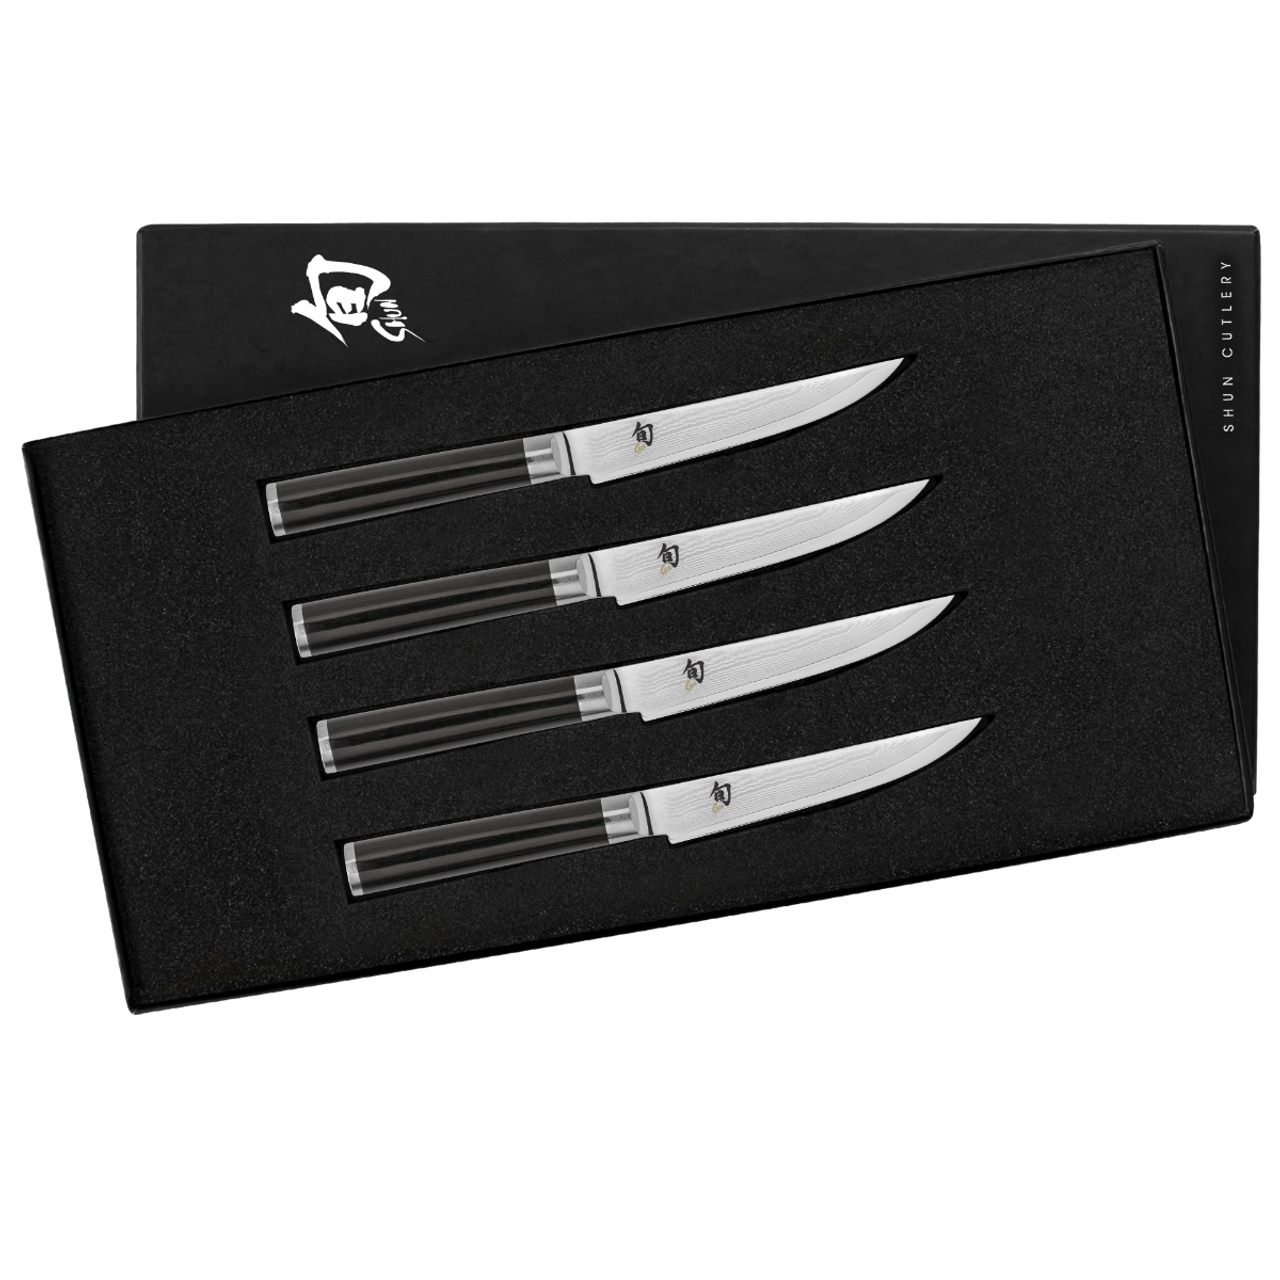 Shun Cutlery Classic Ebony 4PC Steak Knife Set (DMS400) - 4 3/4" Stainless Steel Damascus VG-MAX Blades, D-Shaped Ebony Finished Pakkawood Handles